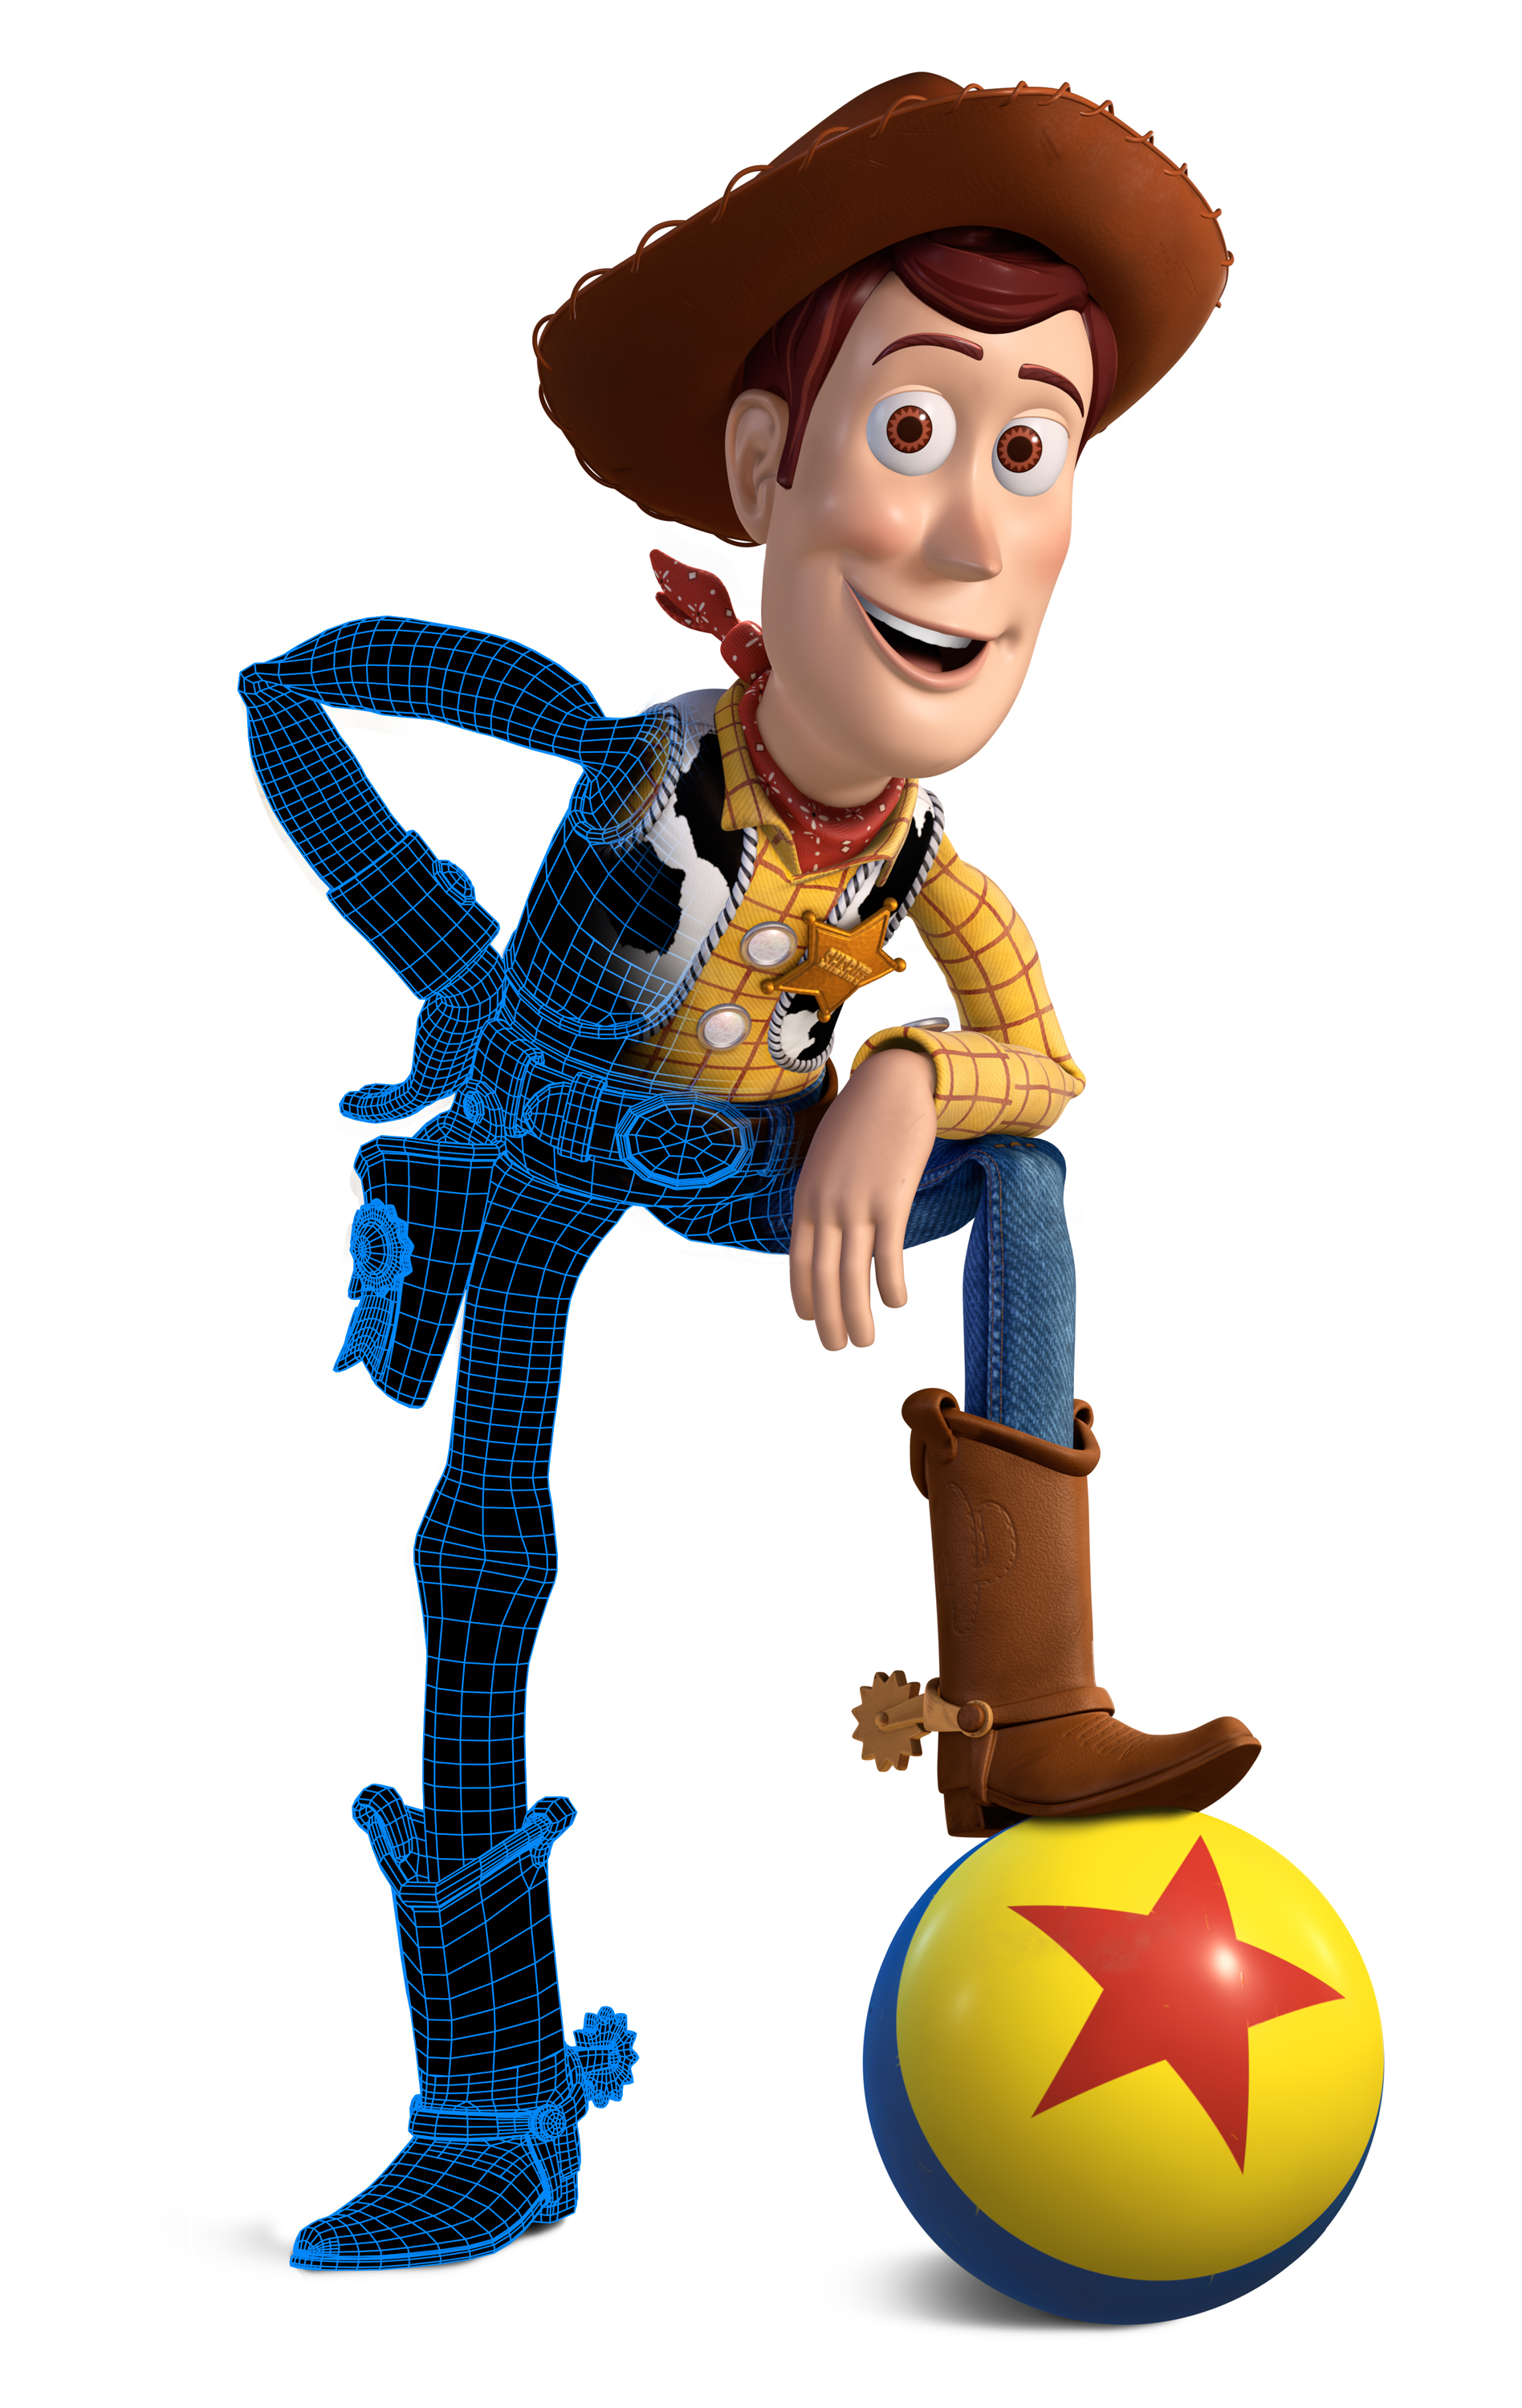 Download Image - Woody LoRes Pixar release.jpg | Pixar Wiki ...